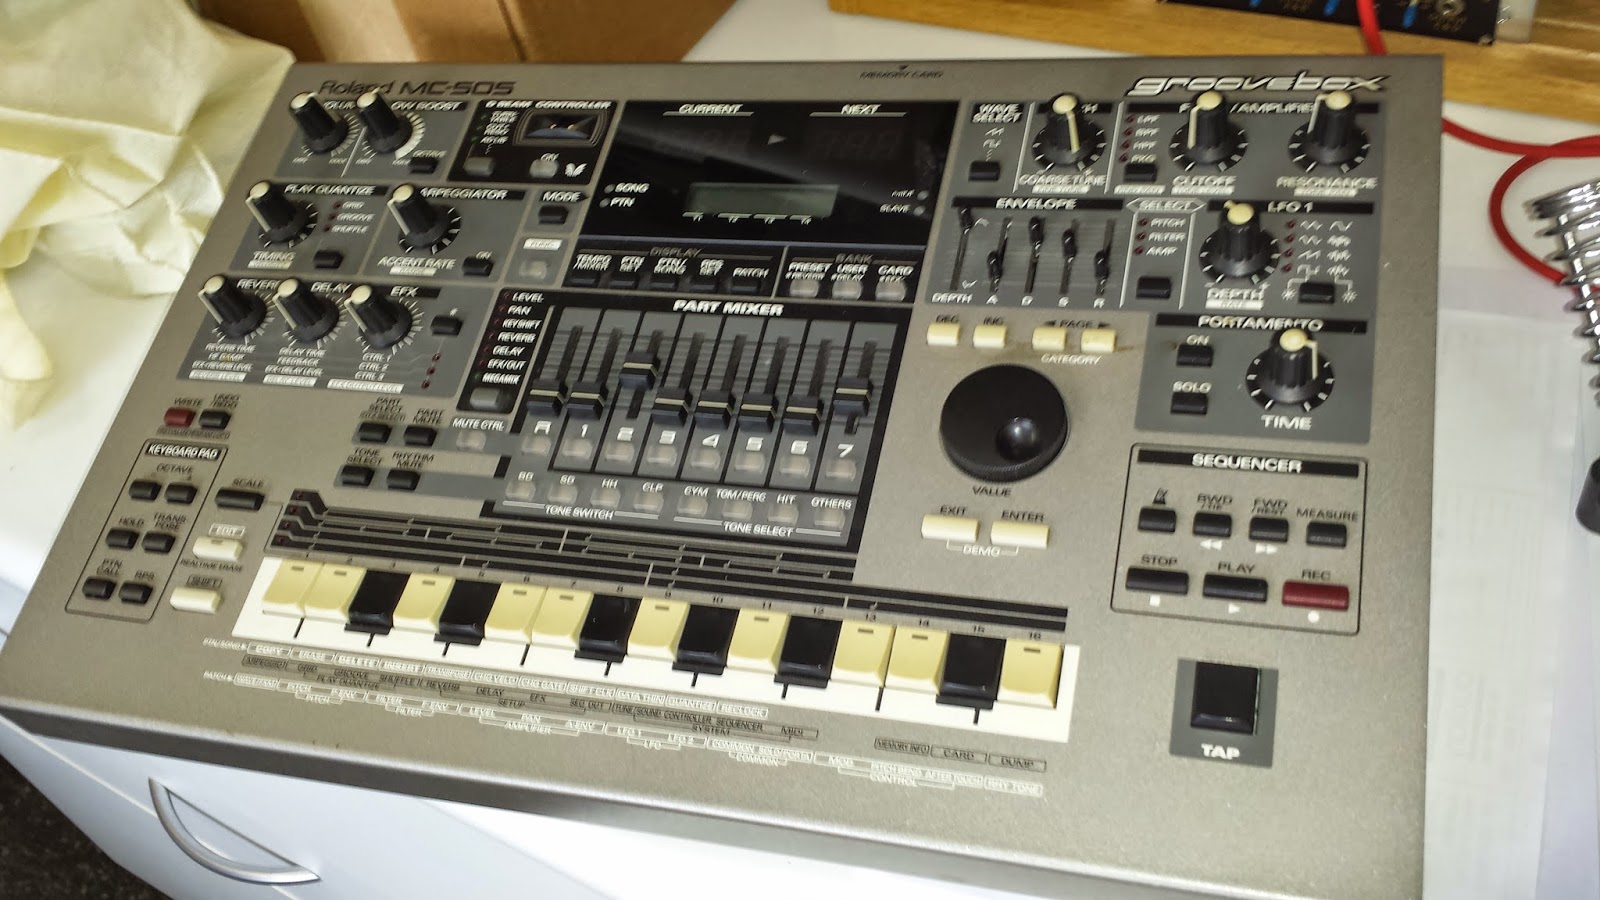 JonDent - Exploring Electronic Music: Roland MC 505 - Groove box